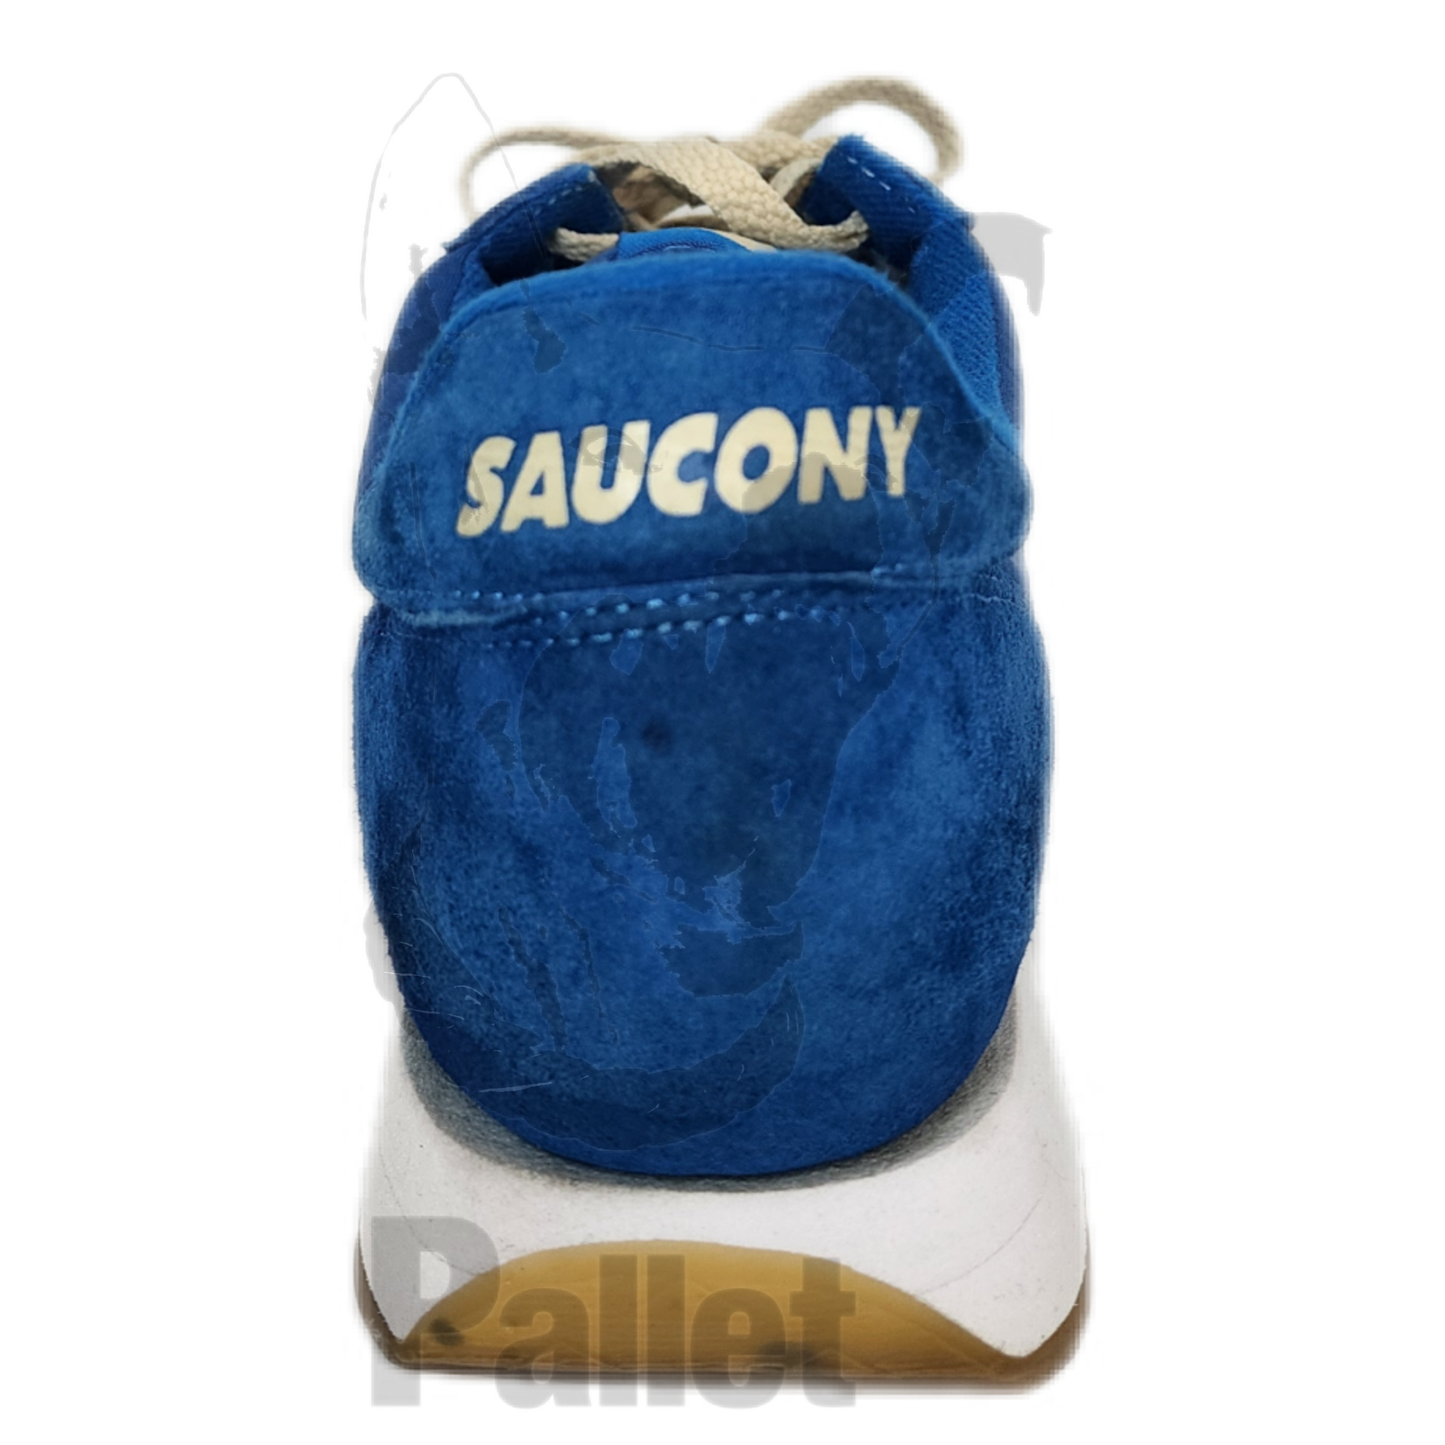 Saucony -" Jazz Original"- Size 11.5